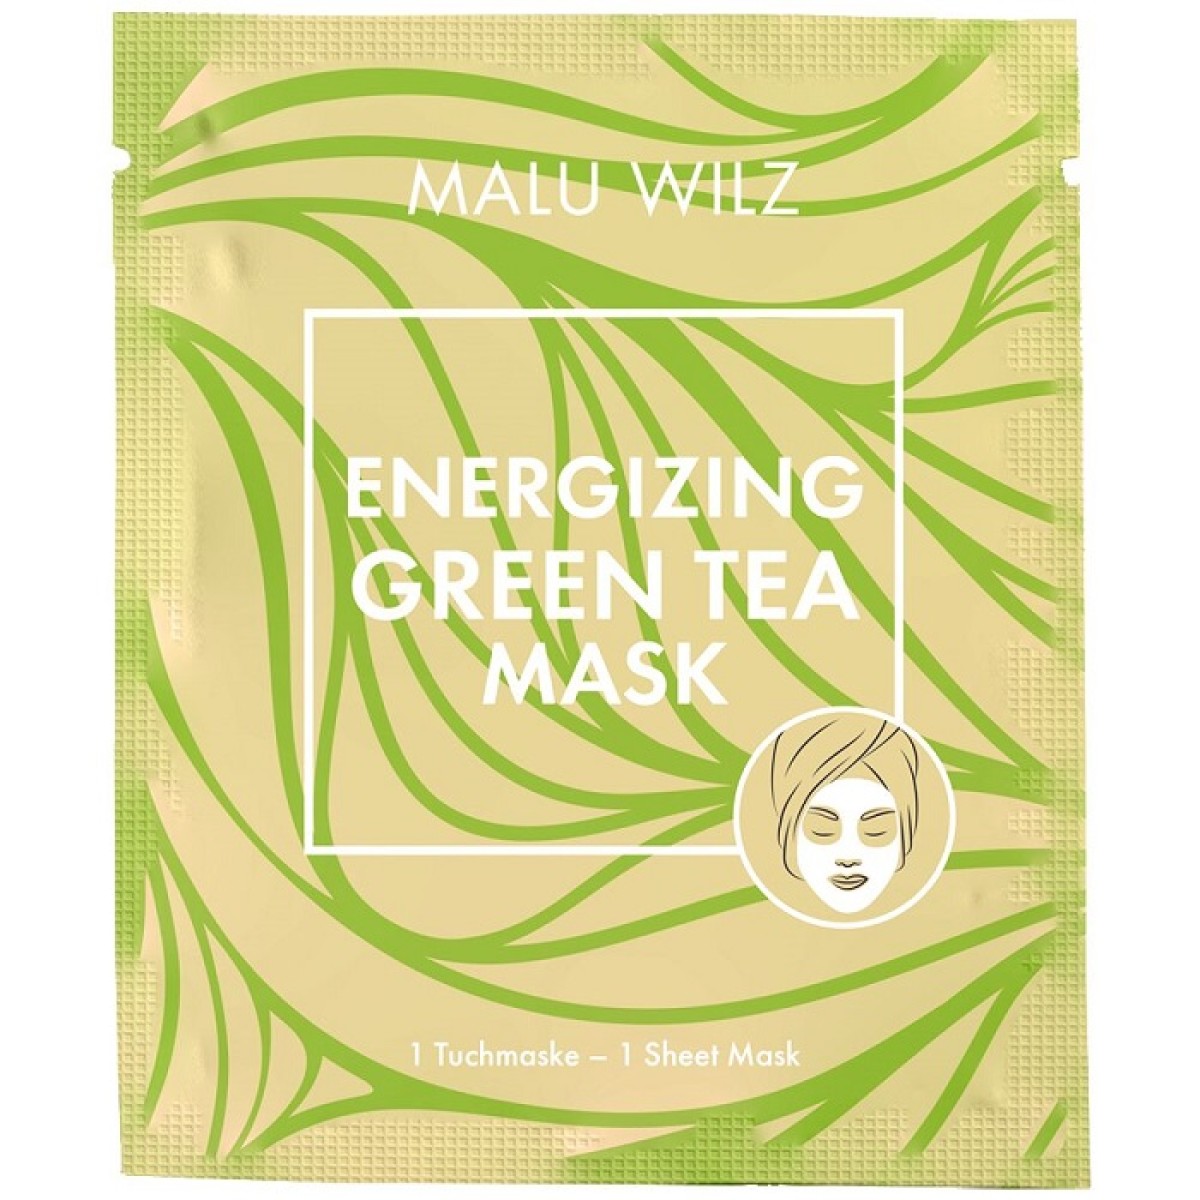 Energizing Green Tea Mask - 1 Sachet